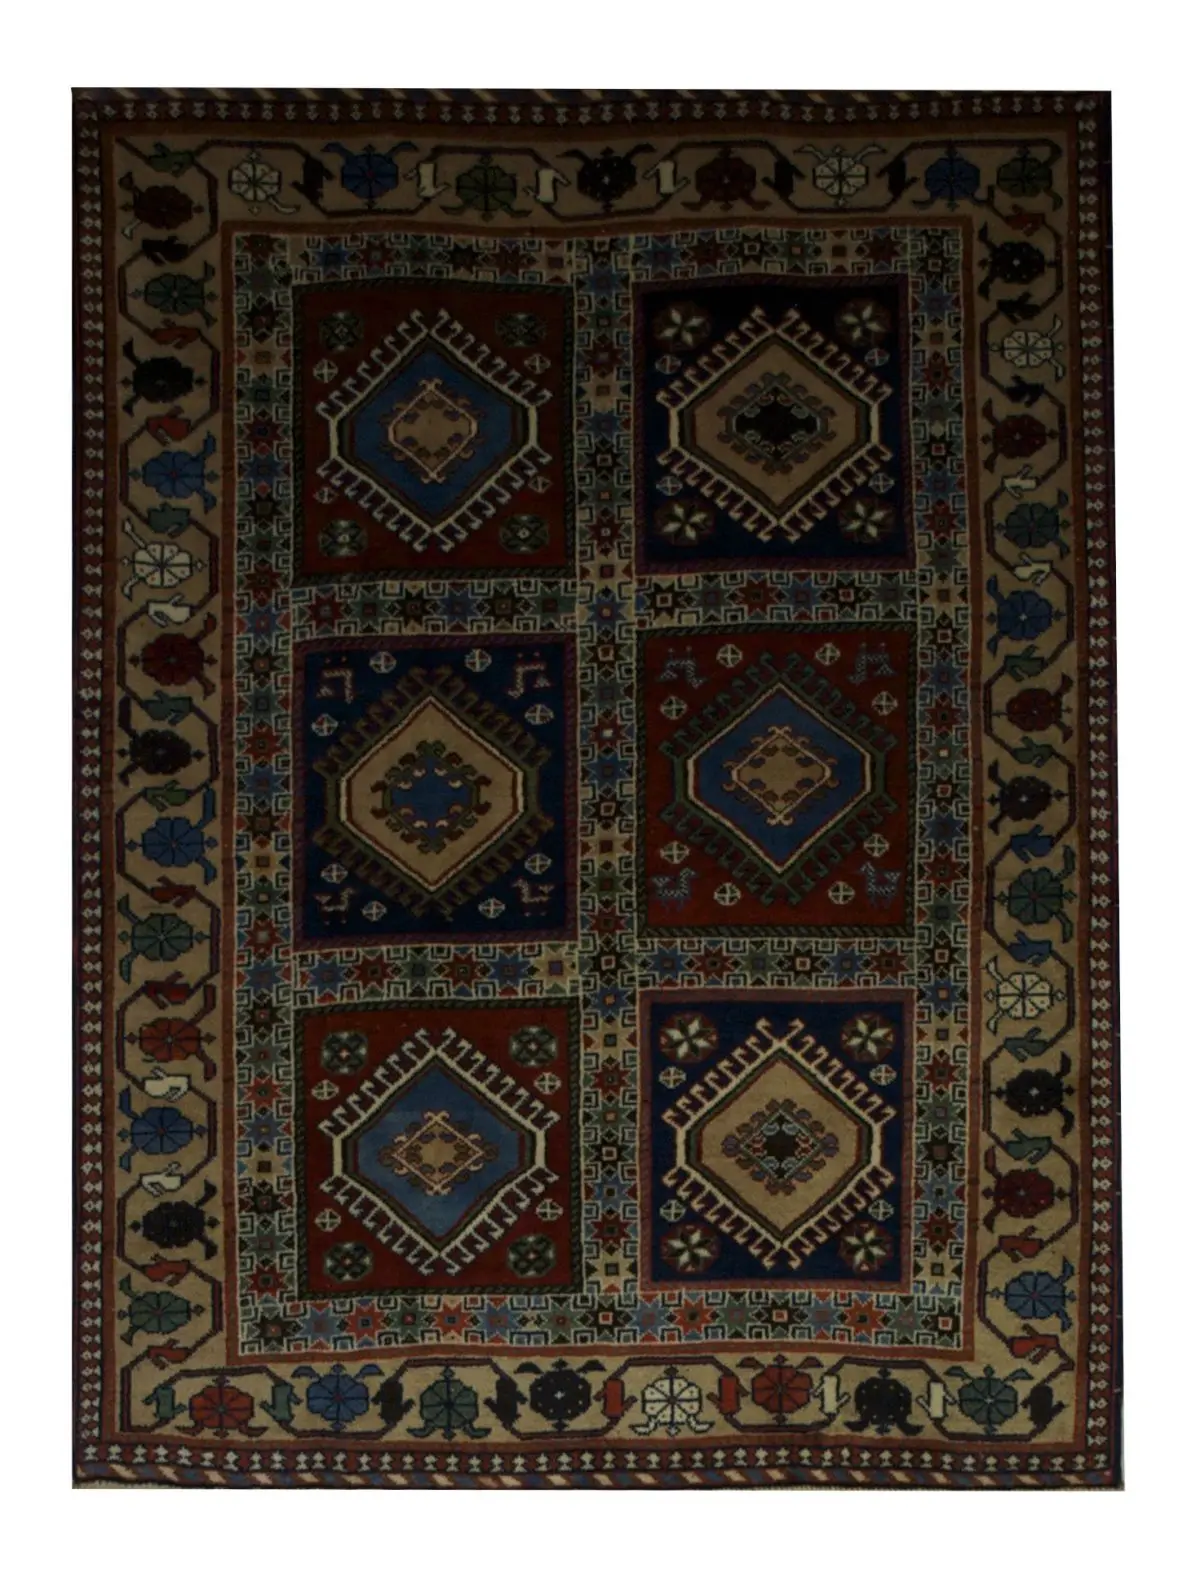 Antique Persian Yallameh rug 3' 9" x 5' Handmade Wool Area Rug - Shabahang Royal Carpet